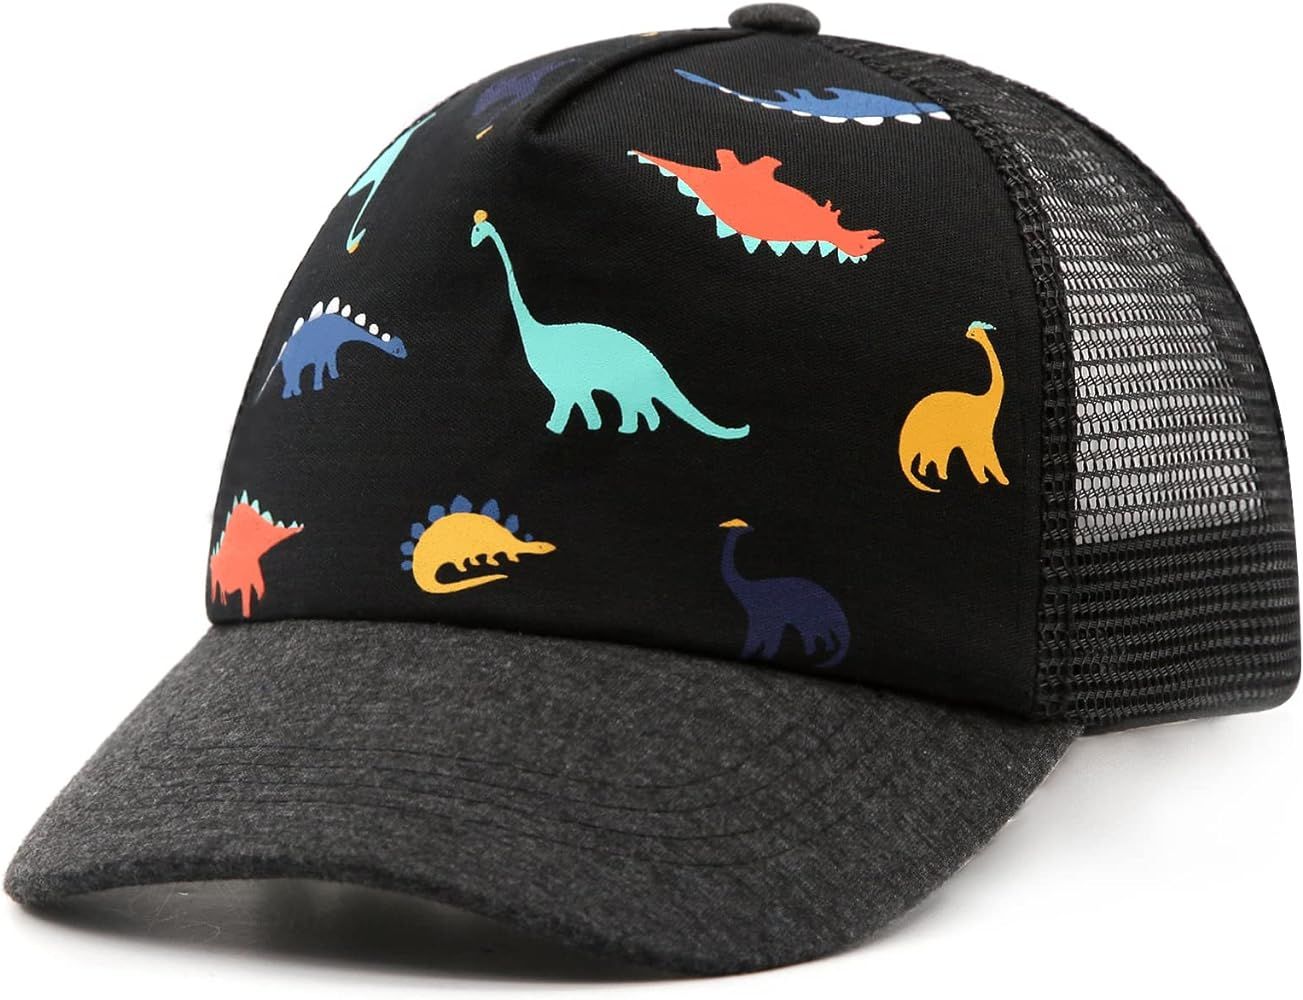 Hpegny Toddler Baseball hat Baby Cap Sun hat Printed Dinosaur Motif Kids Boys Girls Age 0-8T | Amazon (US)